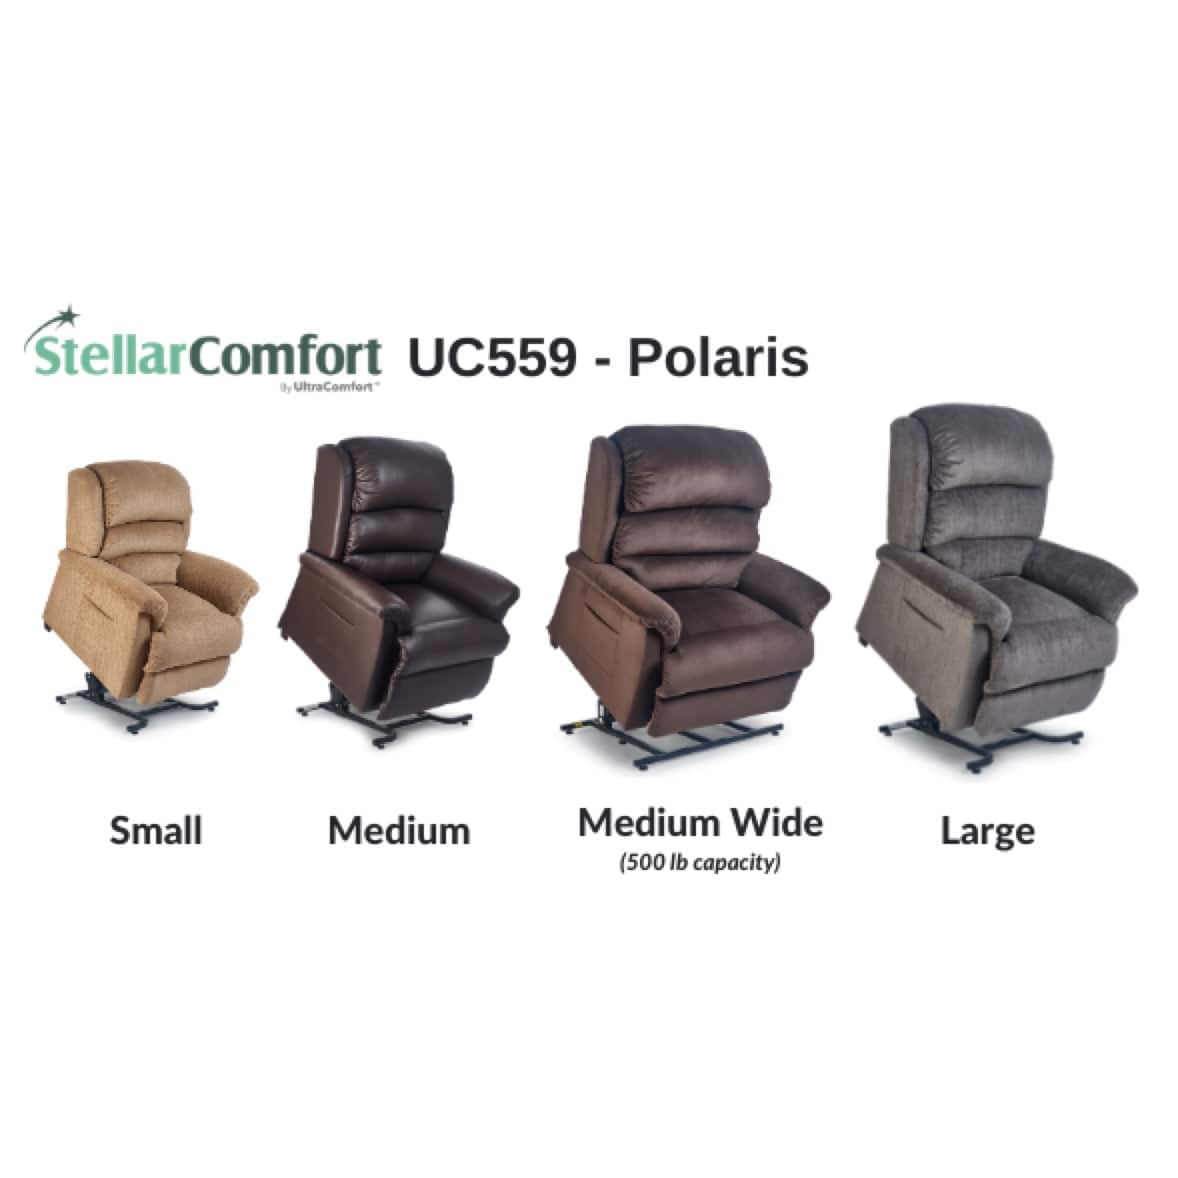 Polaris Lift Chair Power Recliner, size range